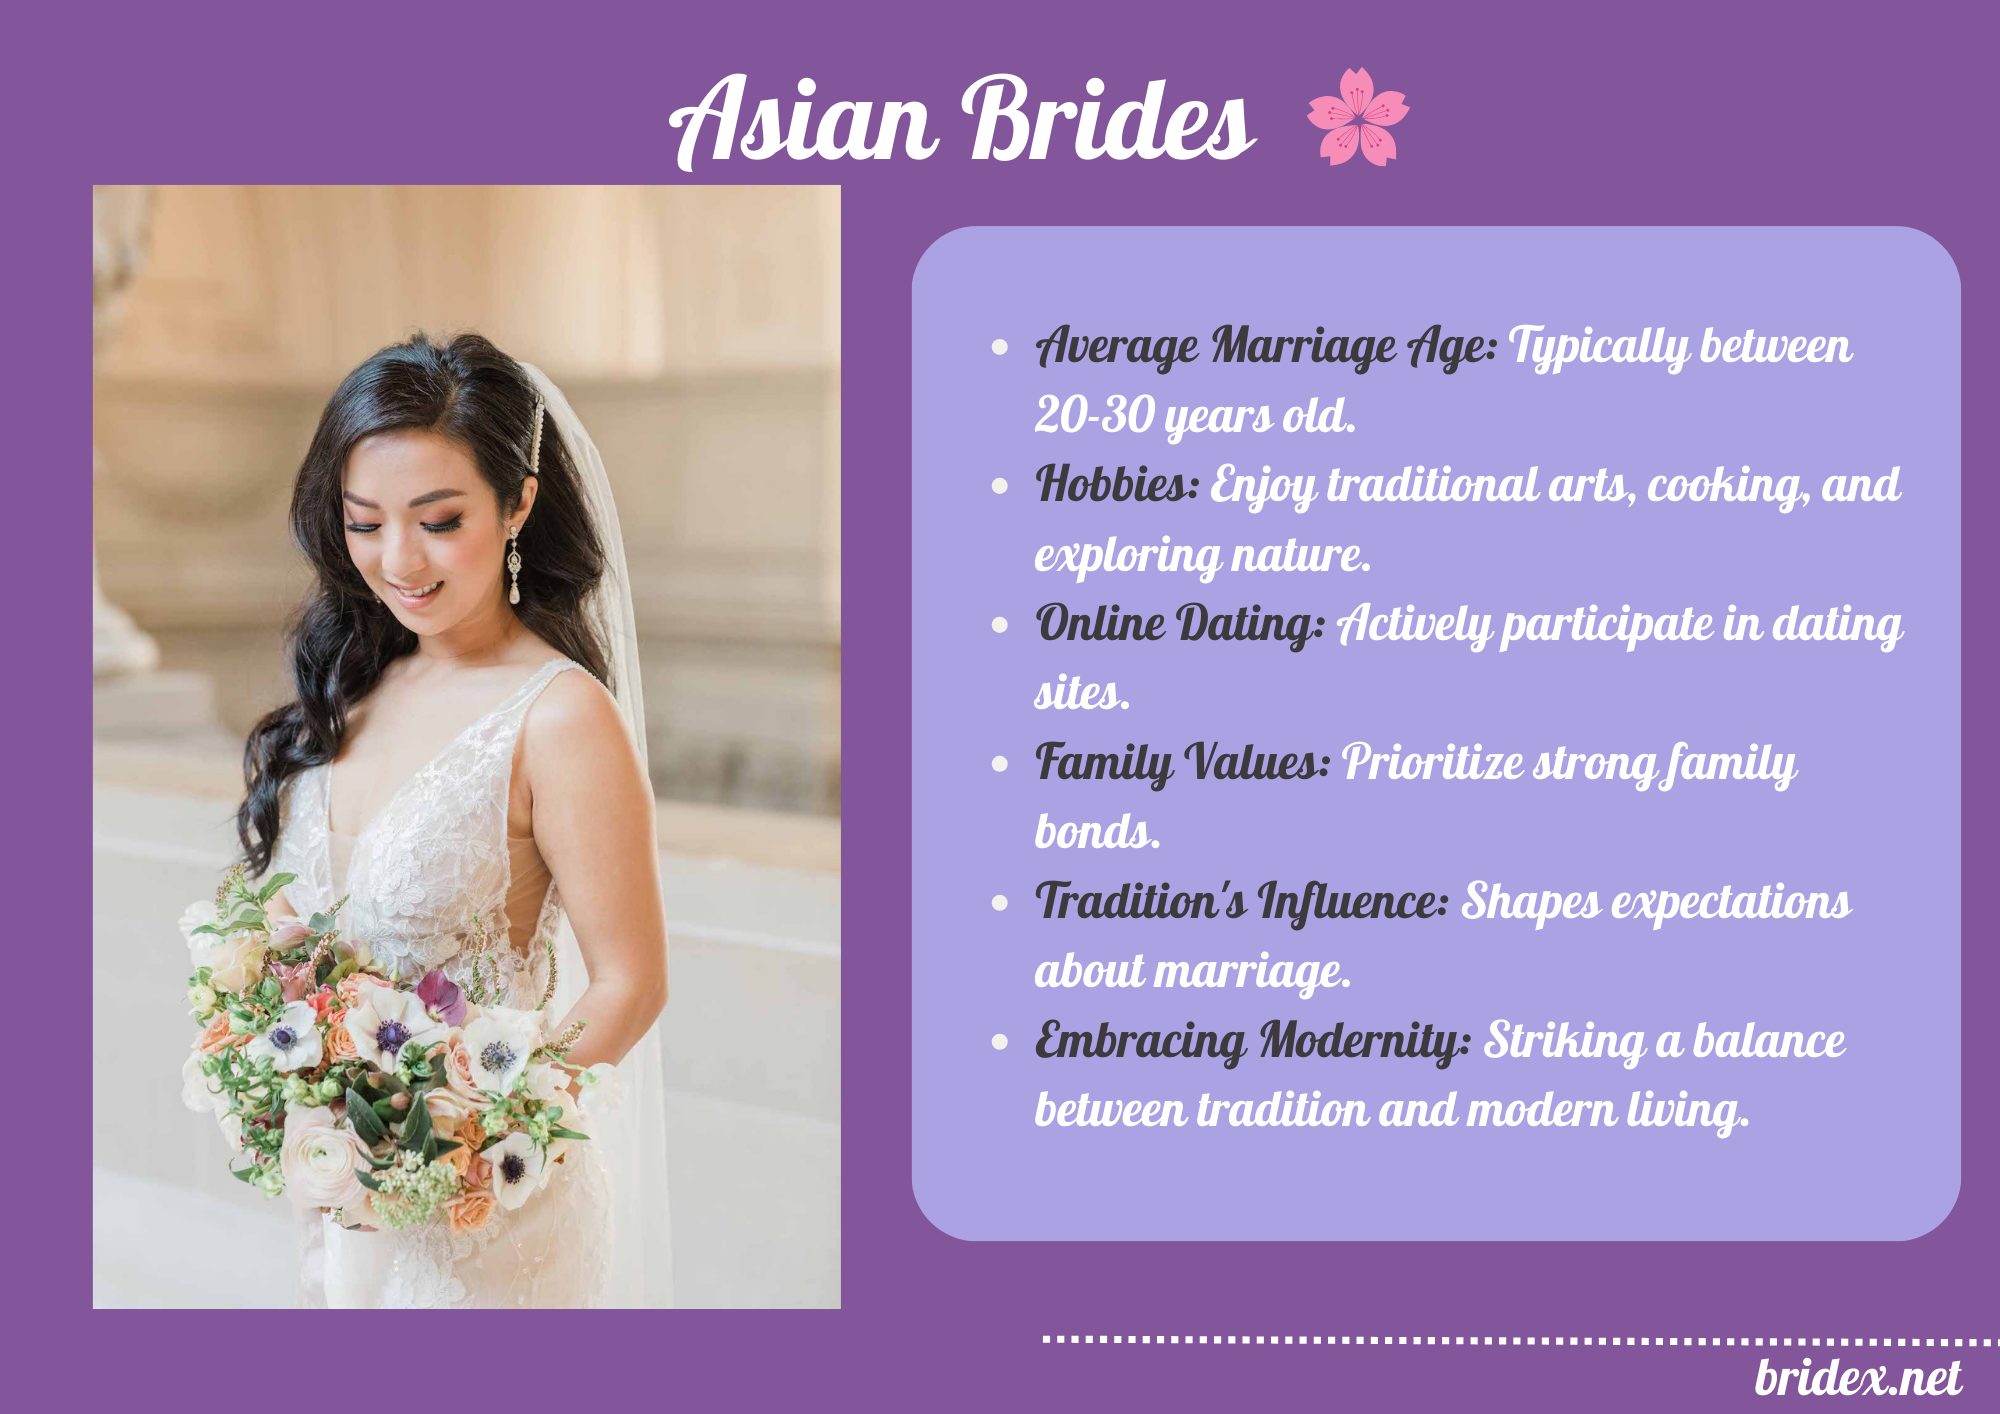 Asian Brides